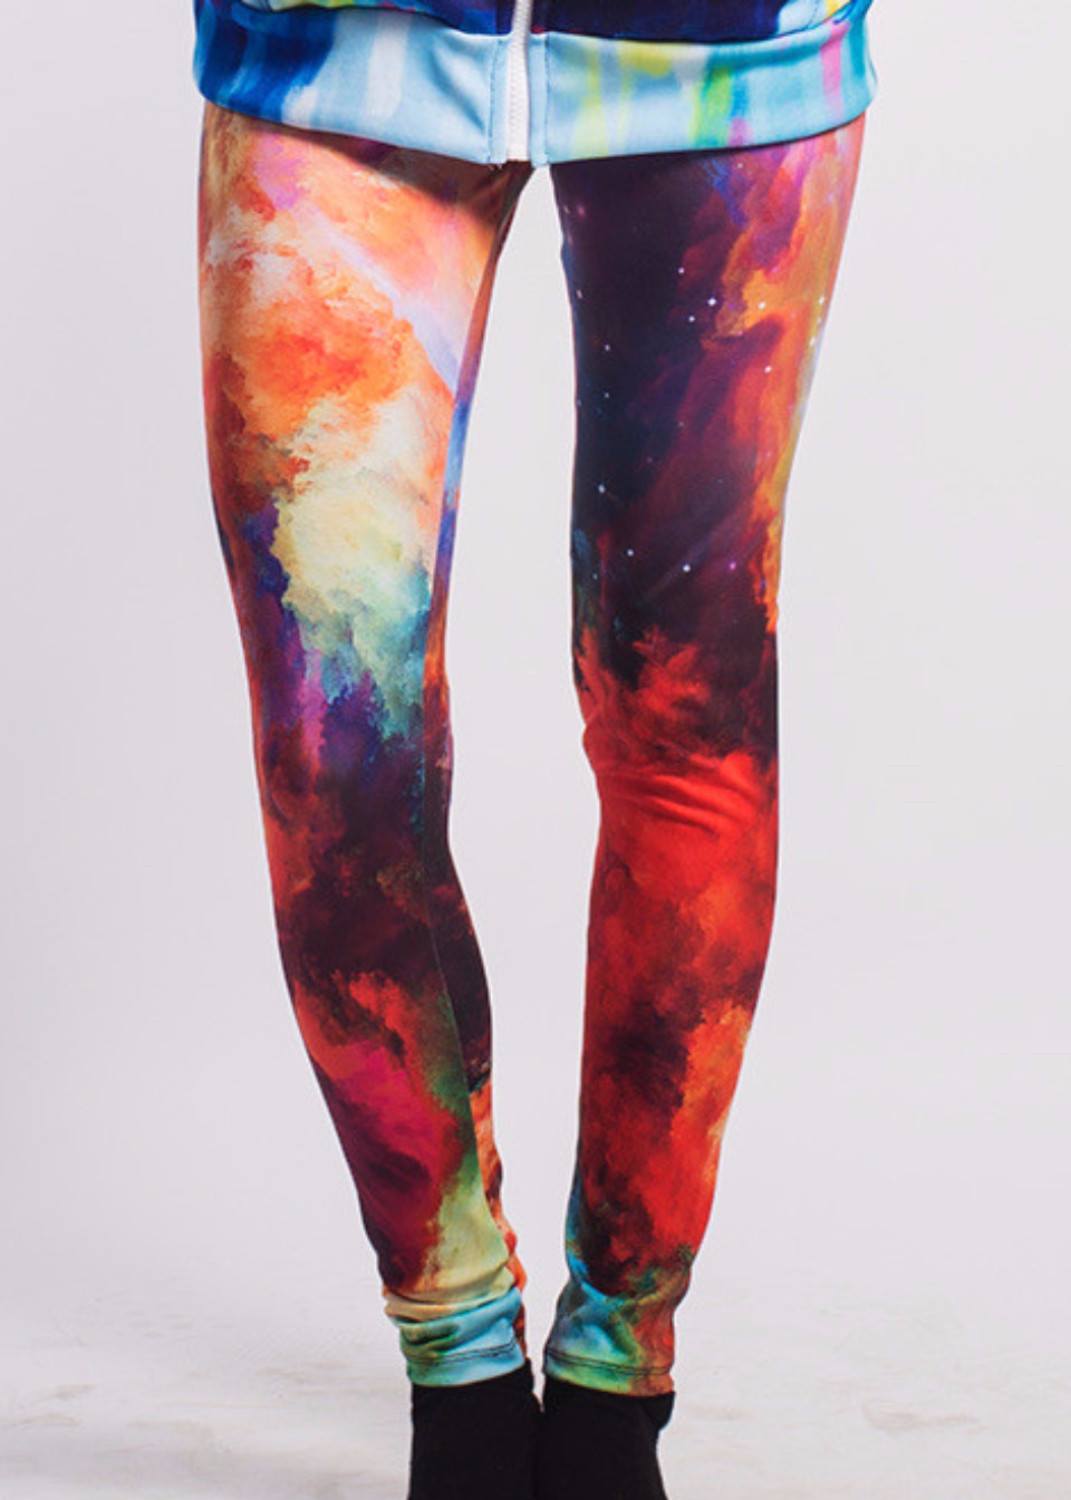 Lovedrop Women's / Girls' Leggings Galaxy 3D Print Colourful